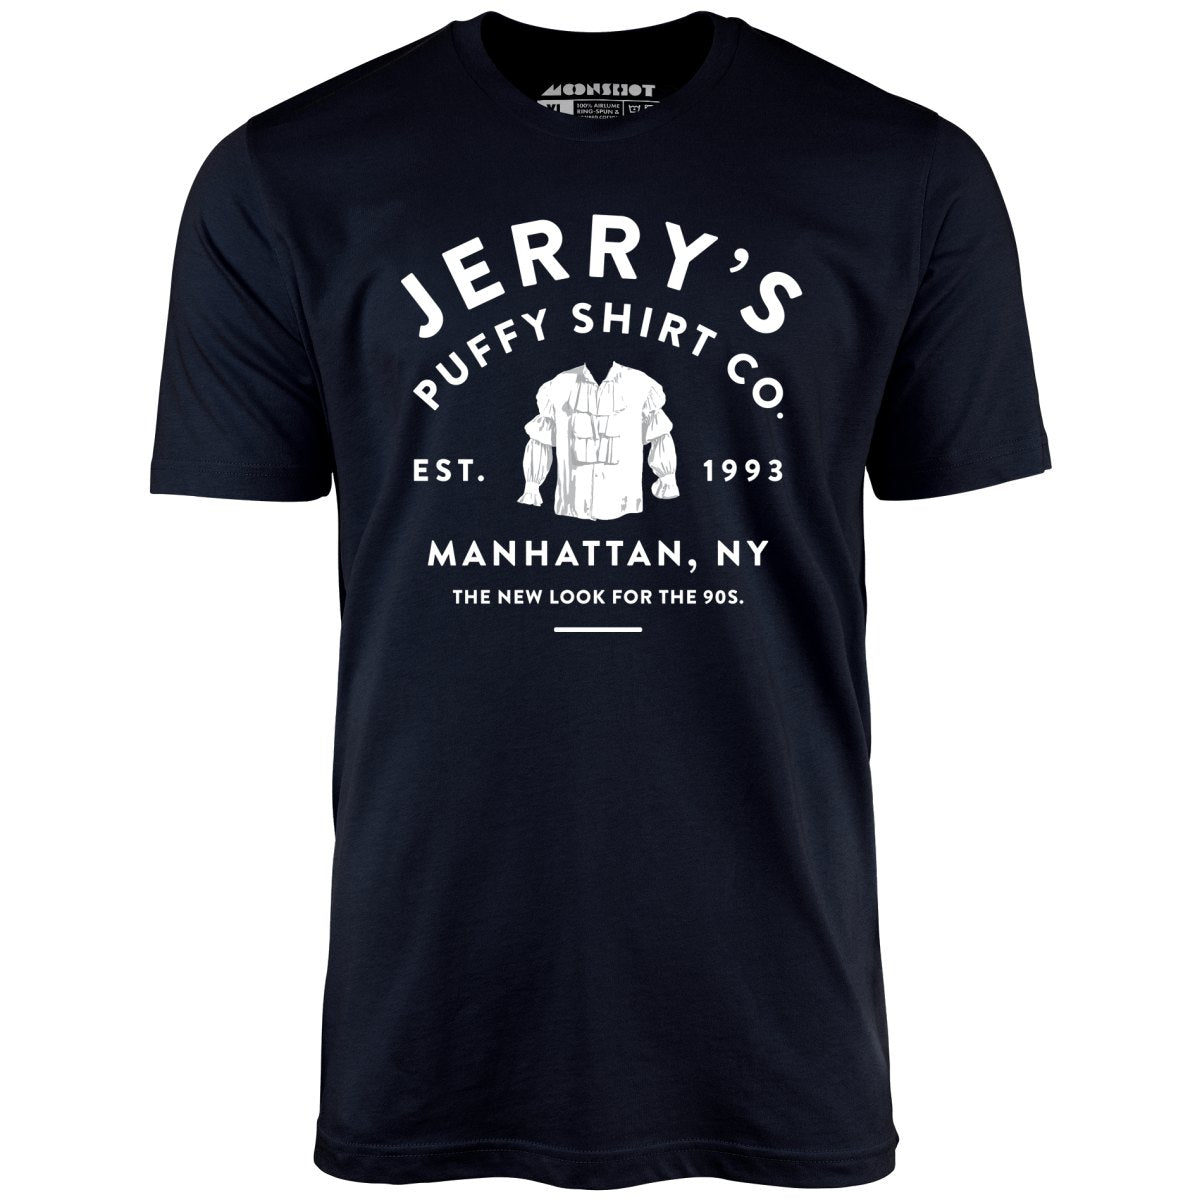 Jerry's Puffy Shirt Co. - Unisex T-Shirt